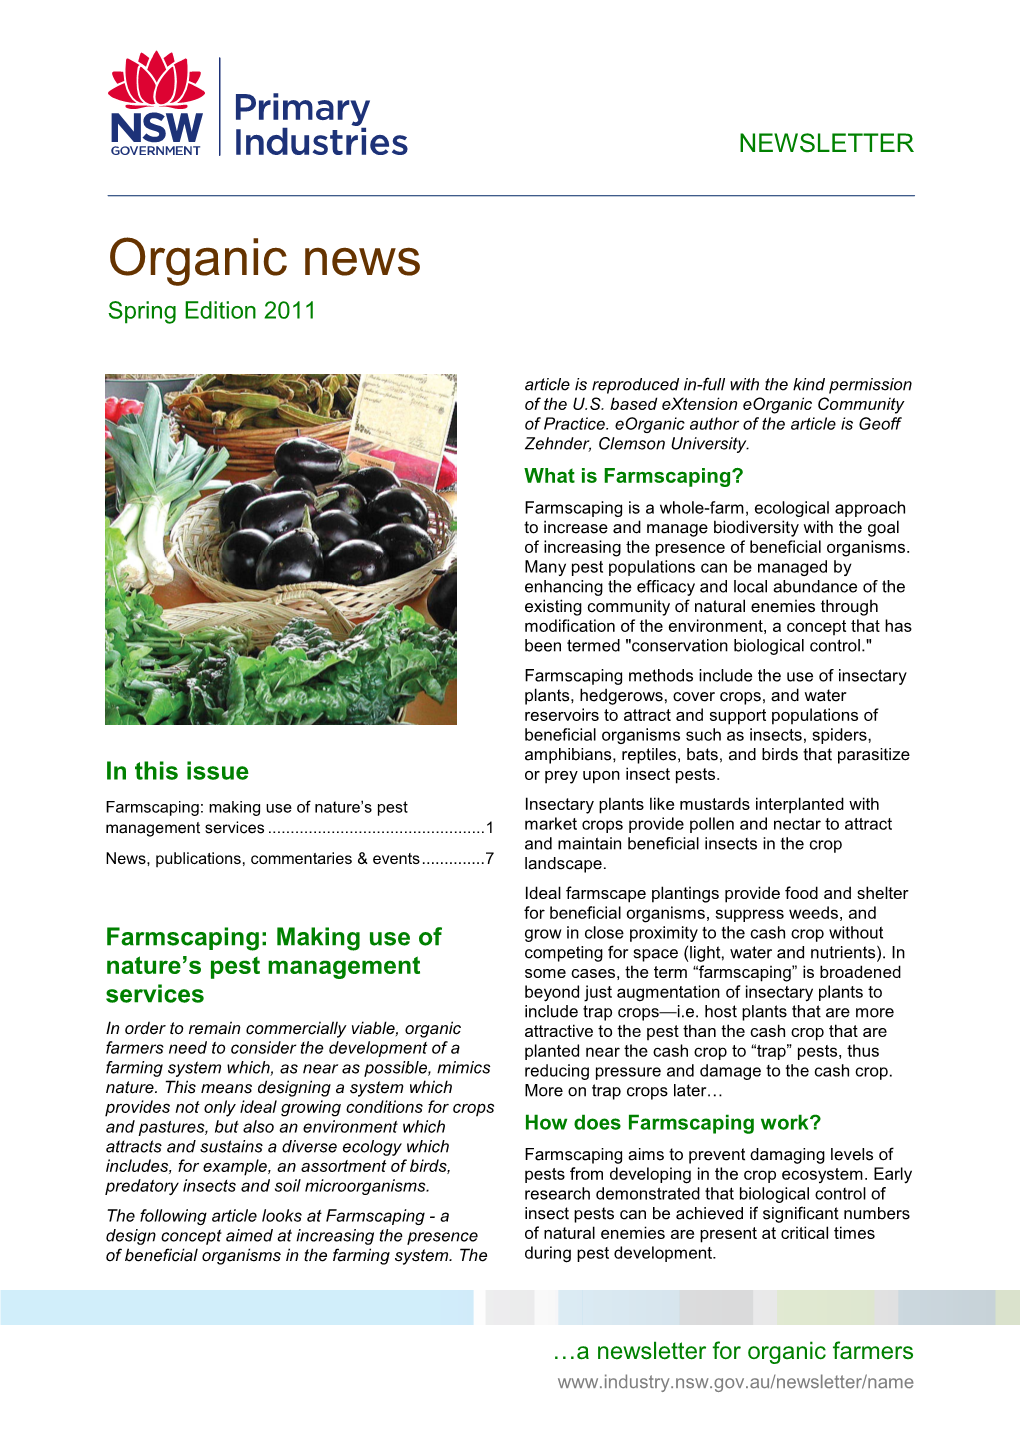 Organic News Spring 2011